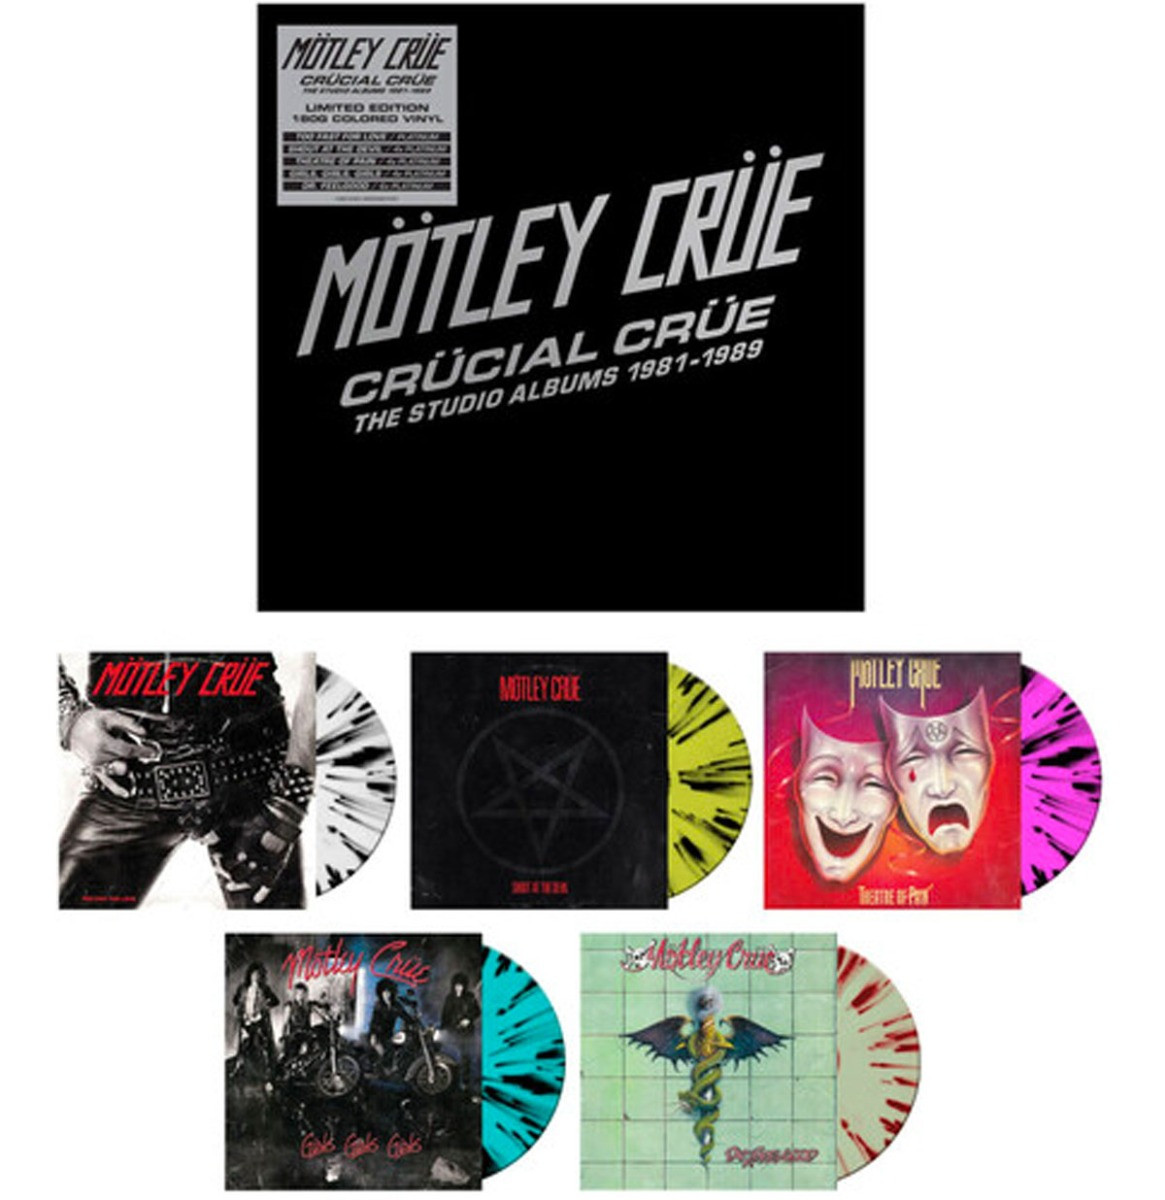 Mötley Crüe - Crücial Crüe: The Studio Albums 1981-1989 (Gekleurd Vinyl) (Boxset) 5LP